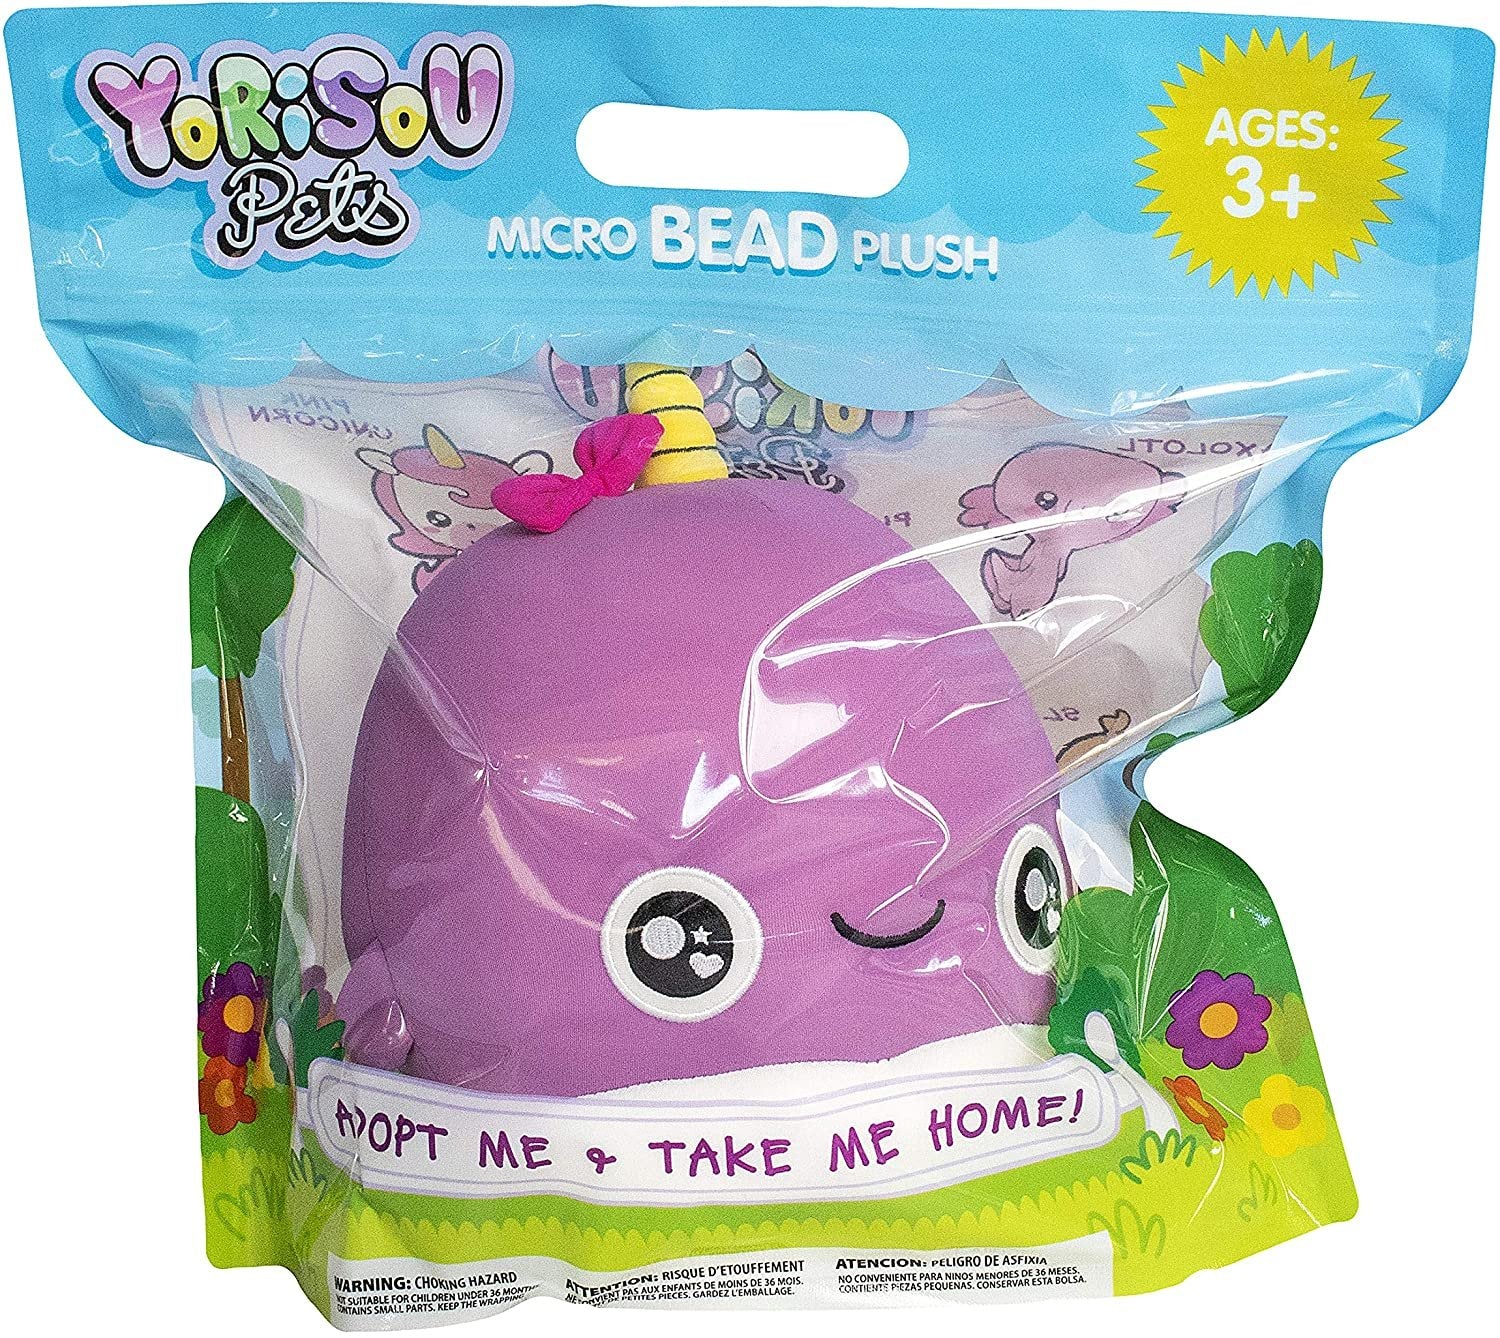 Yorisou Pets Micro Bead Plush